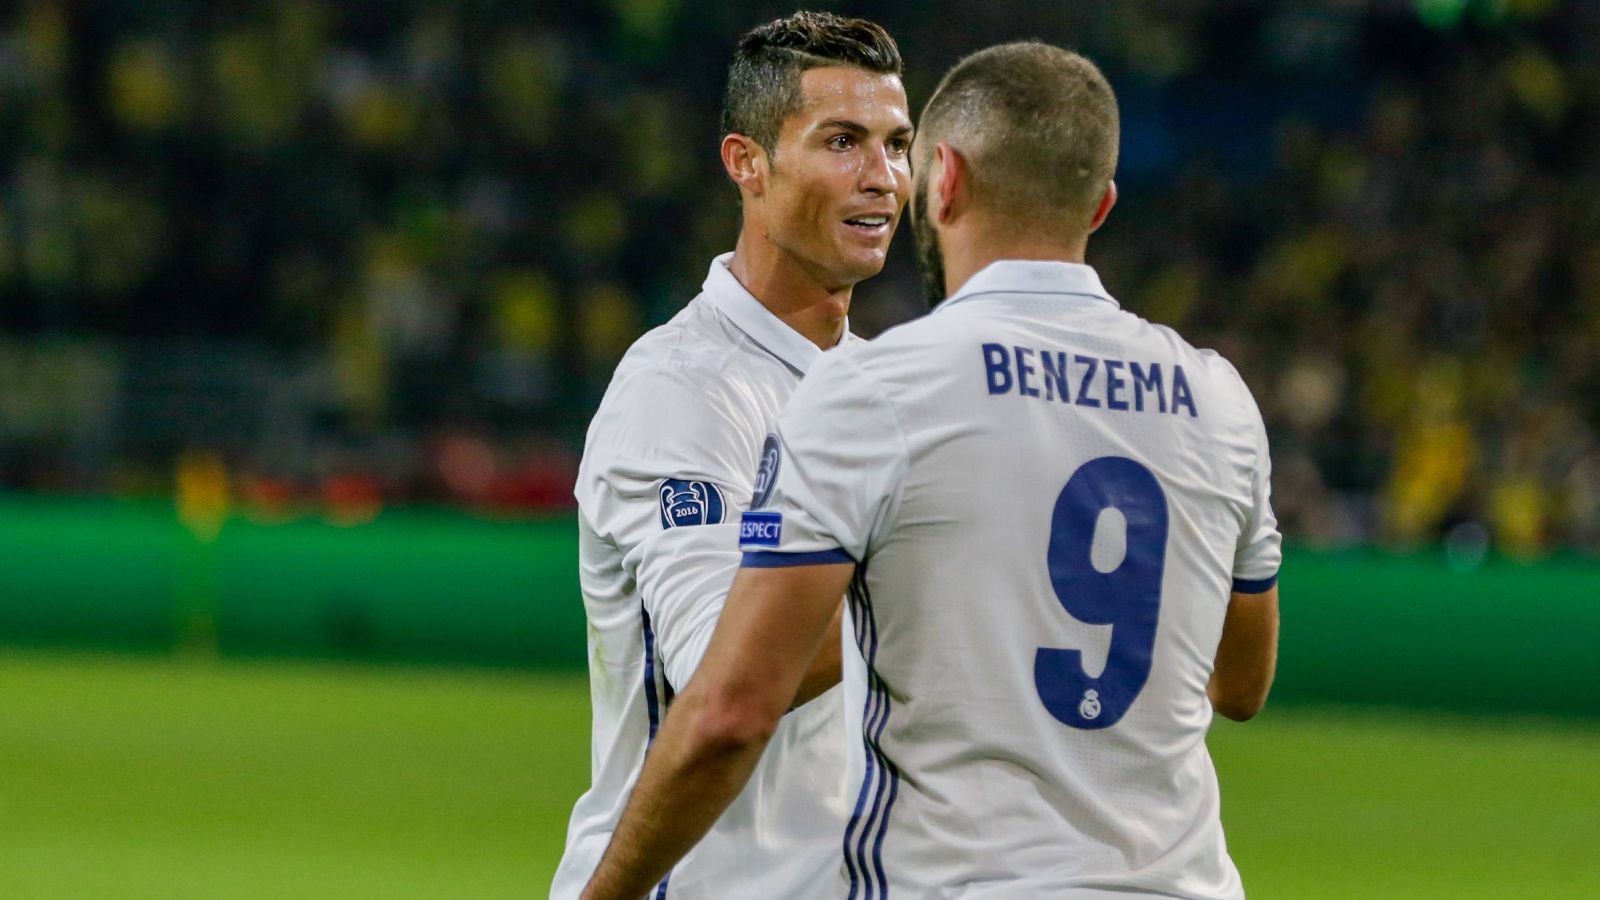 
                <strong>Cristiano Ronaldo und Karim Benzema (Real Madrid, Saison 2015/16)</strong><br>
                Tore gesamt: 20 (Cristiano Ronaldo mit 16 Toren, Karim Benzema mit vier Toren)
              